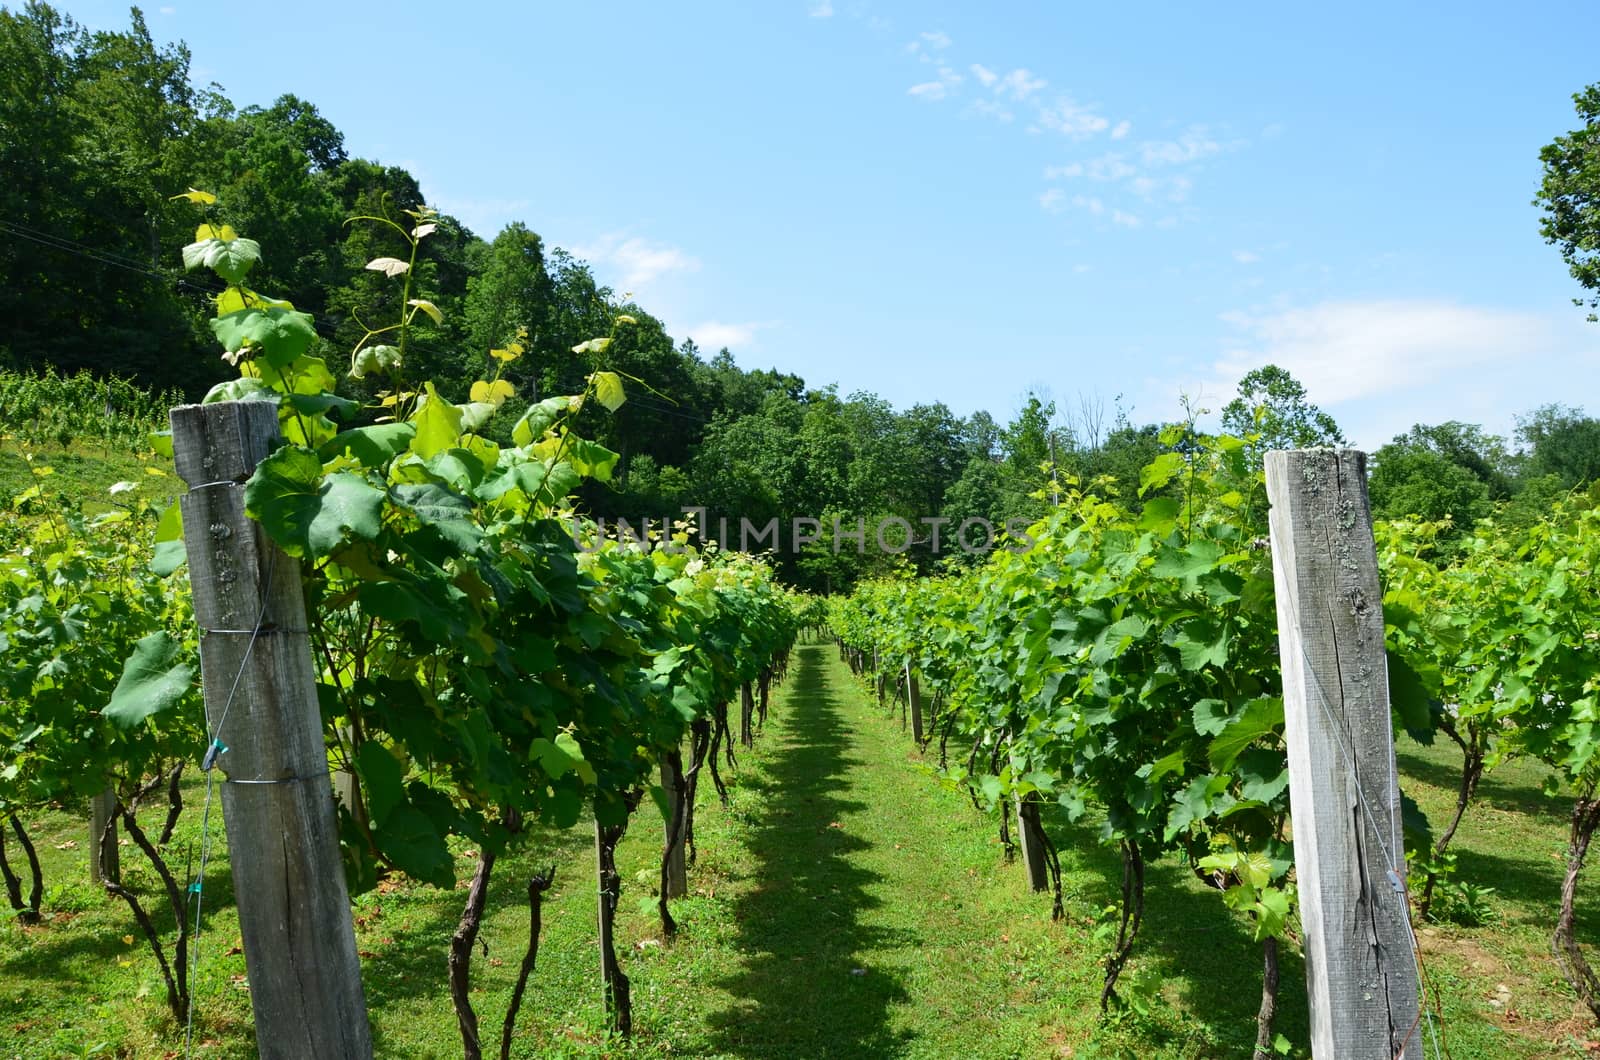 Grape Vines by northwoodsphoto